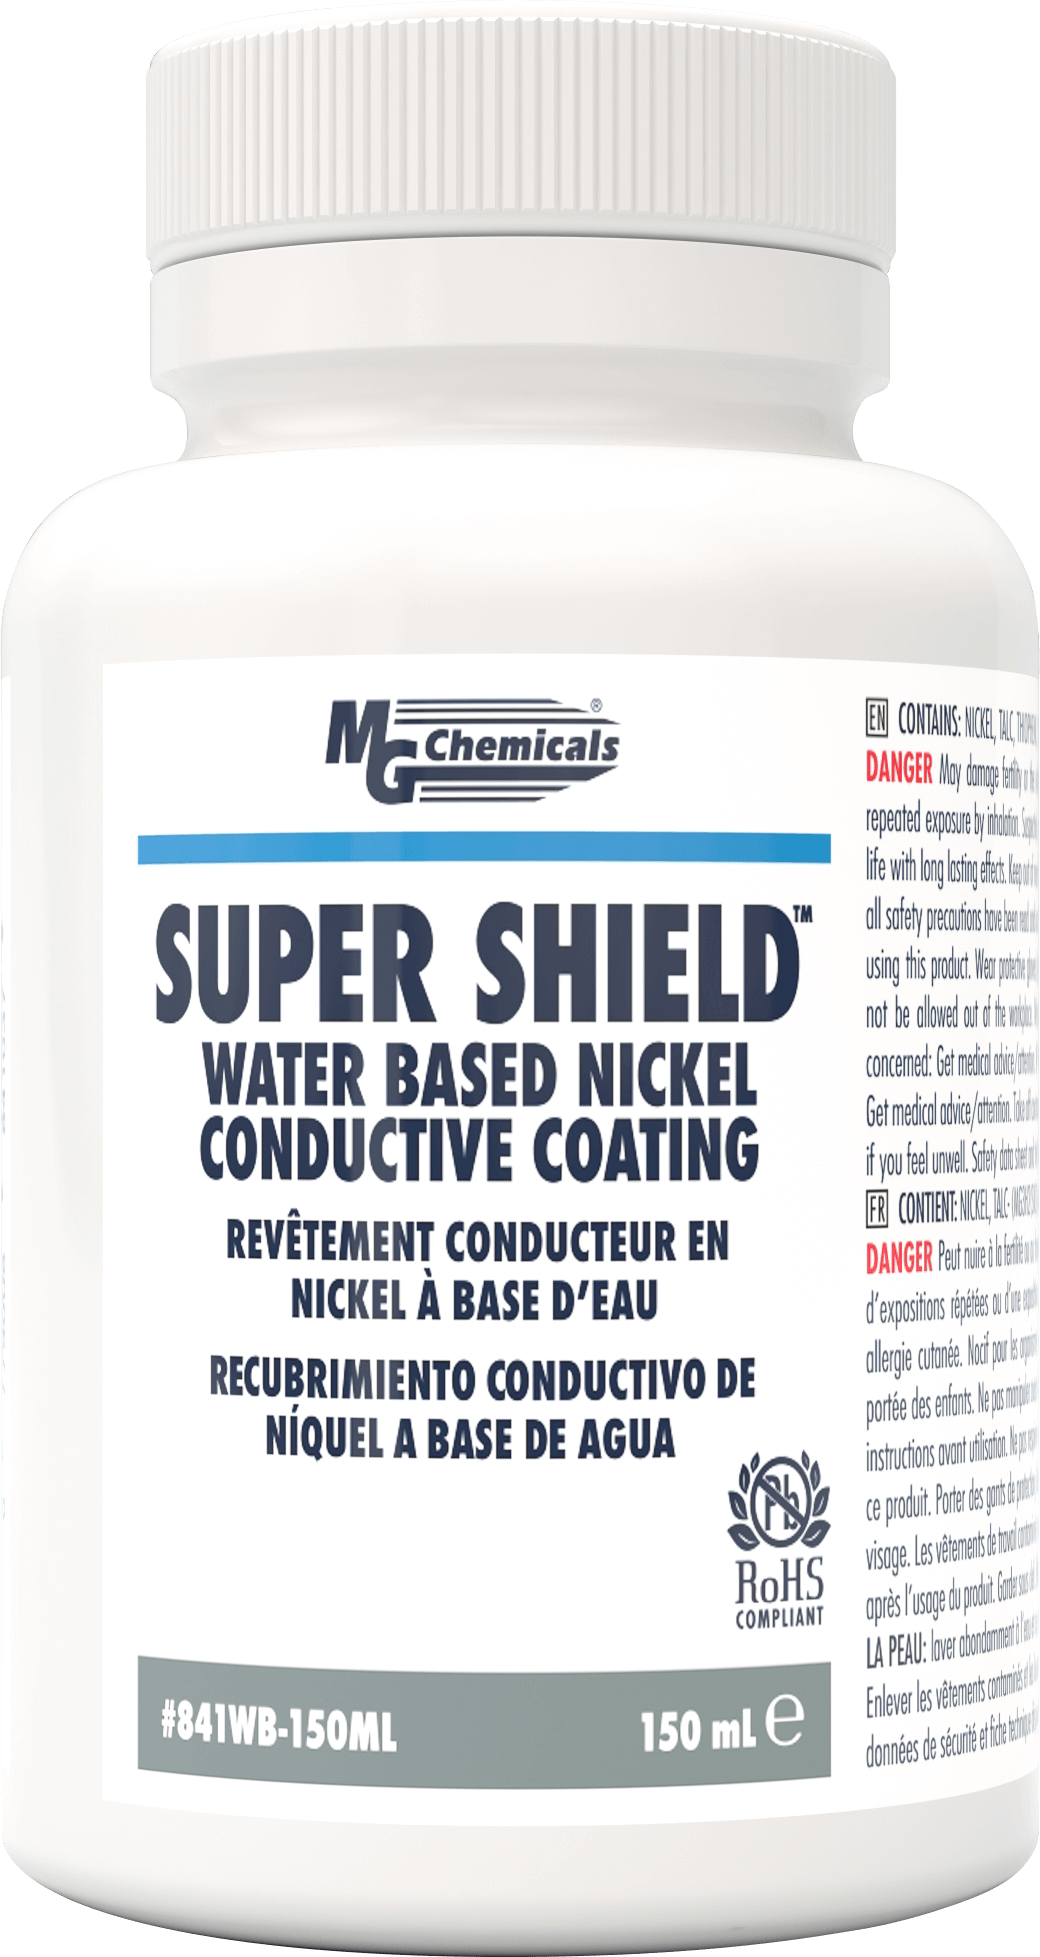 SUPER SHIELD Water Based Nickel Conductive Coating